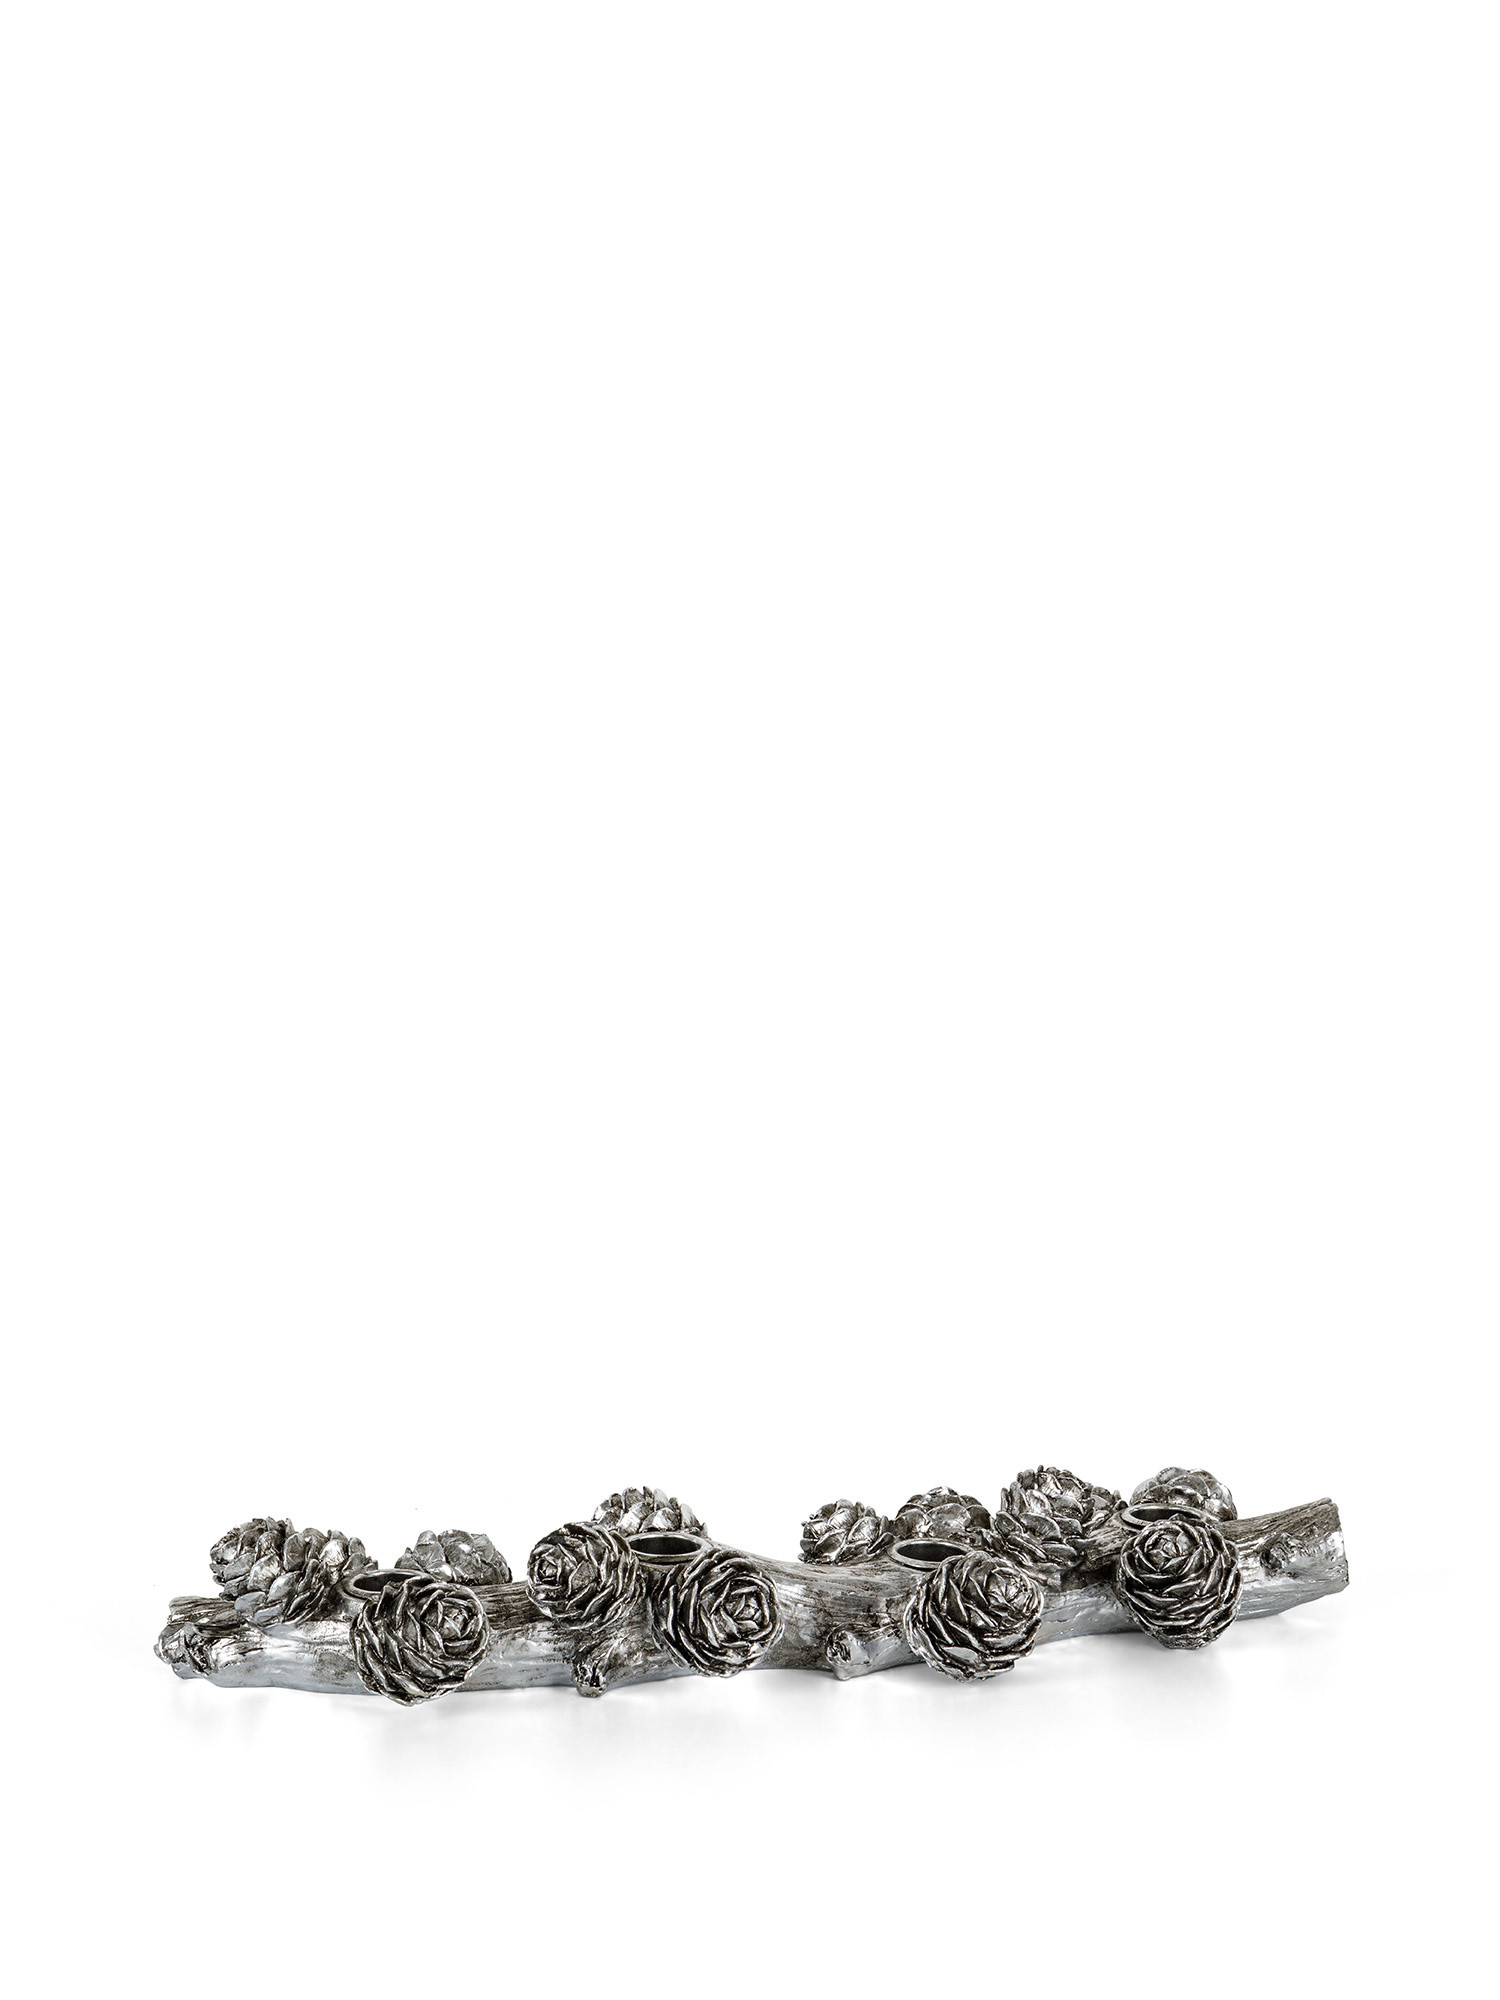 Candeliere a forma di ramo con pigne, Grigio argento, large image number 0